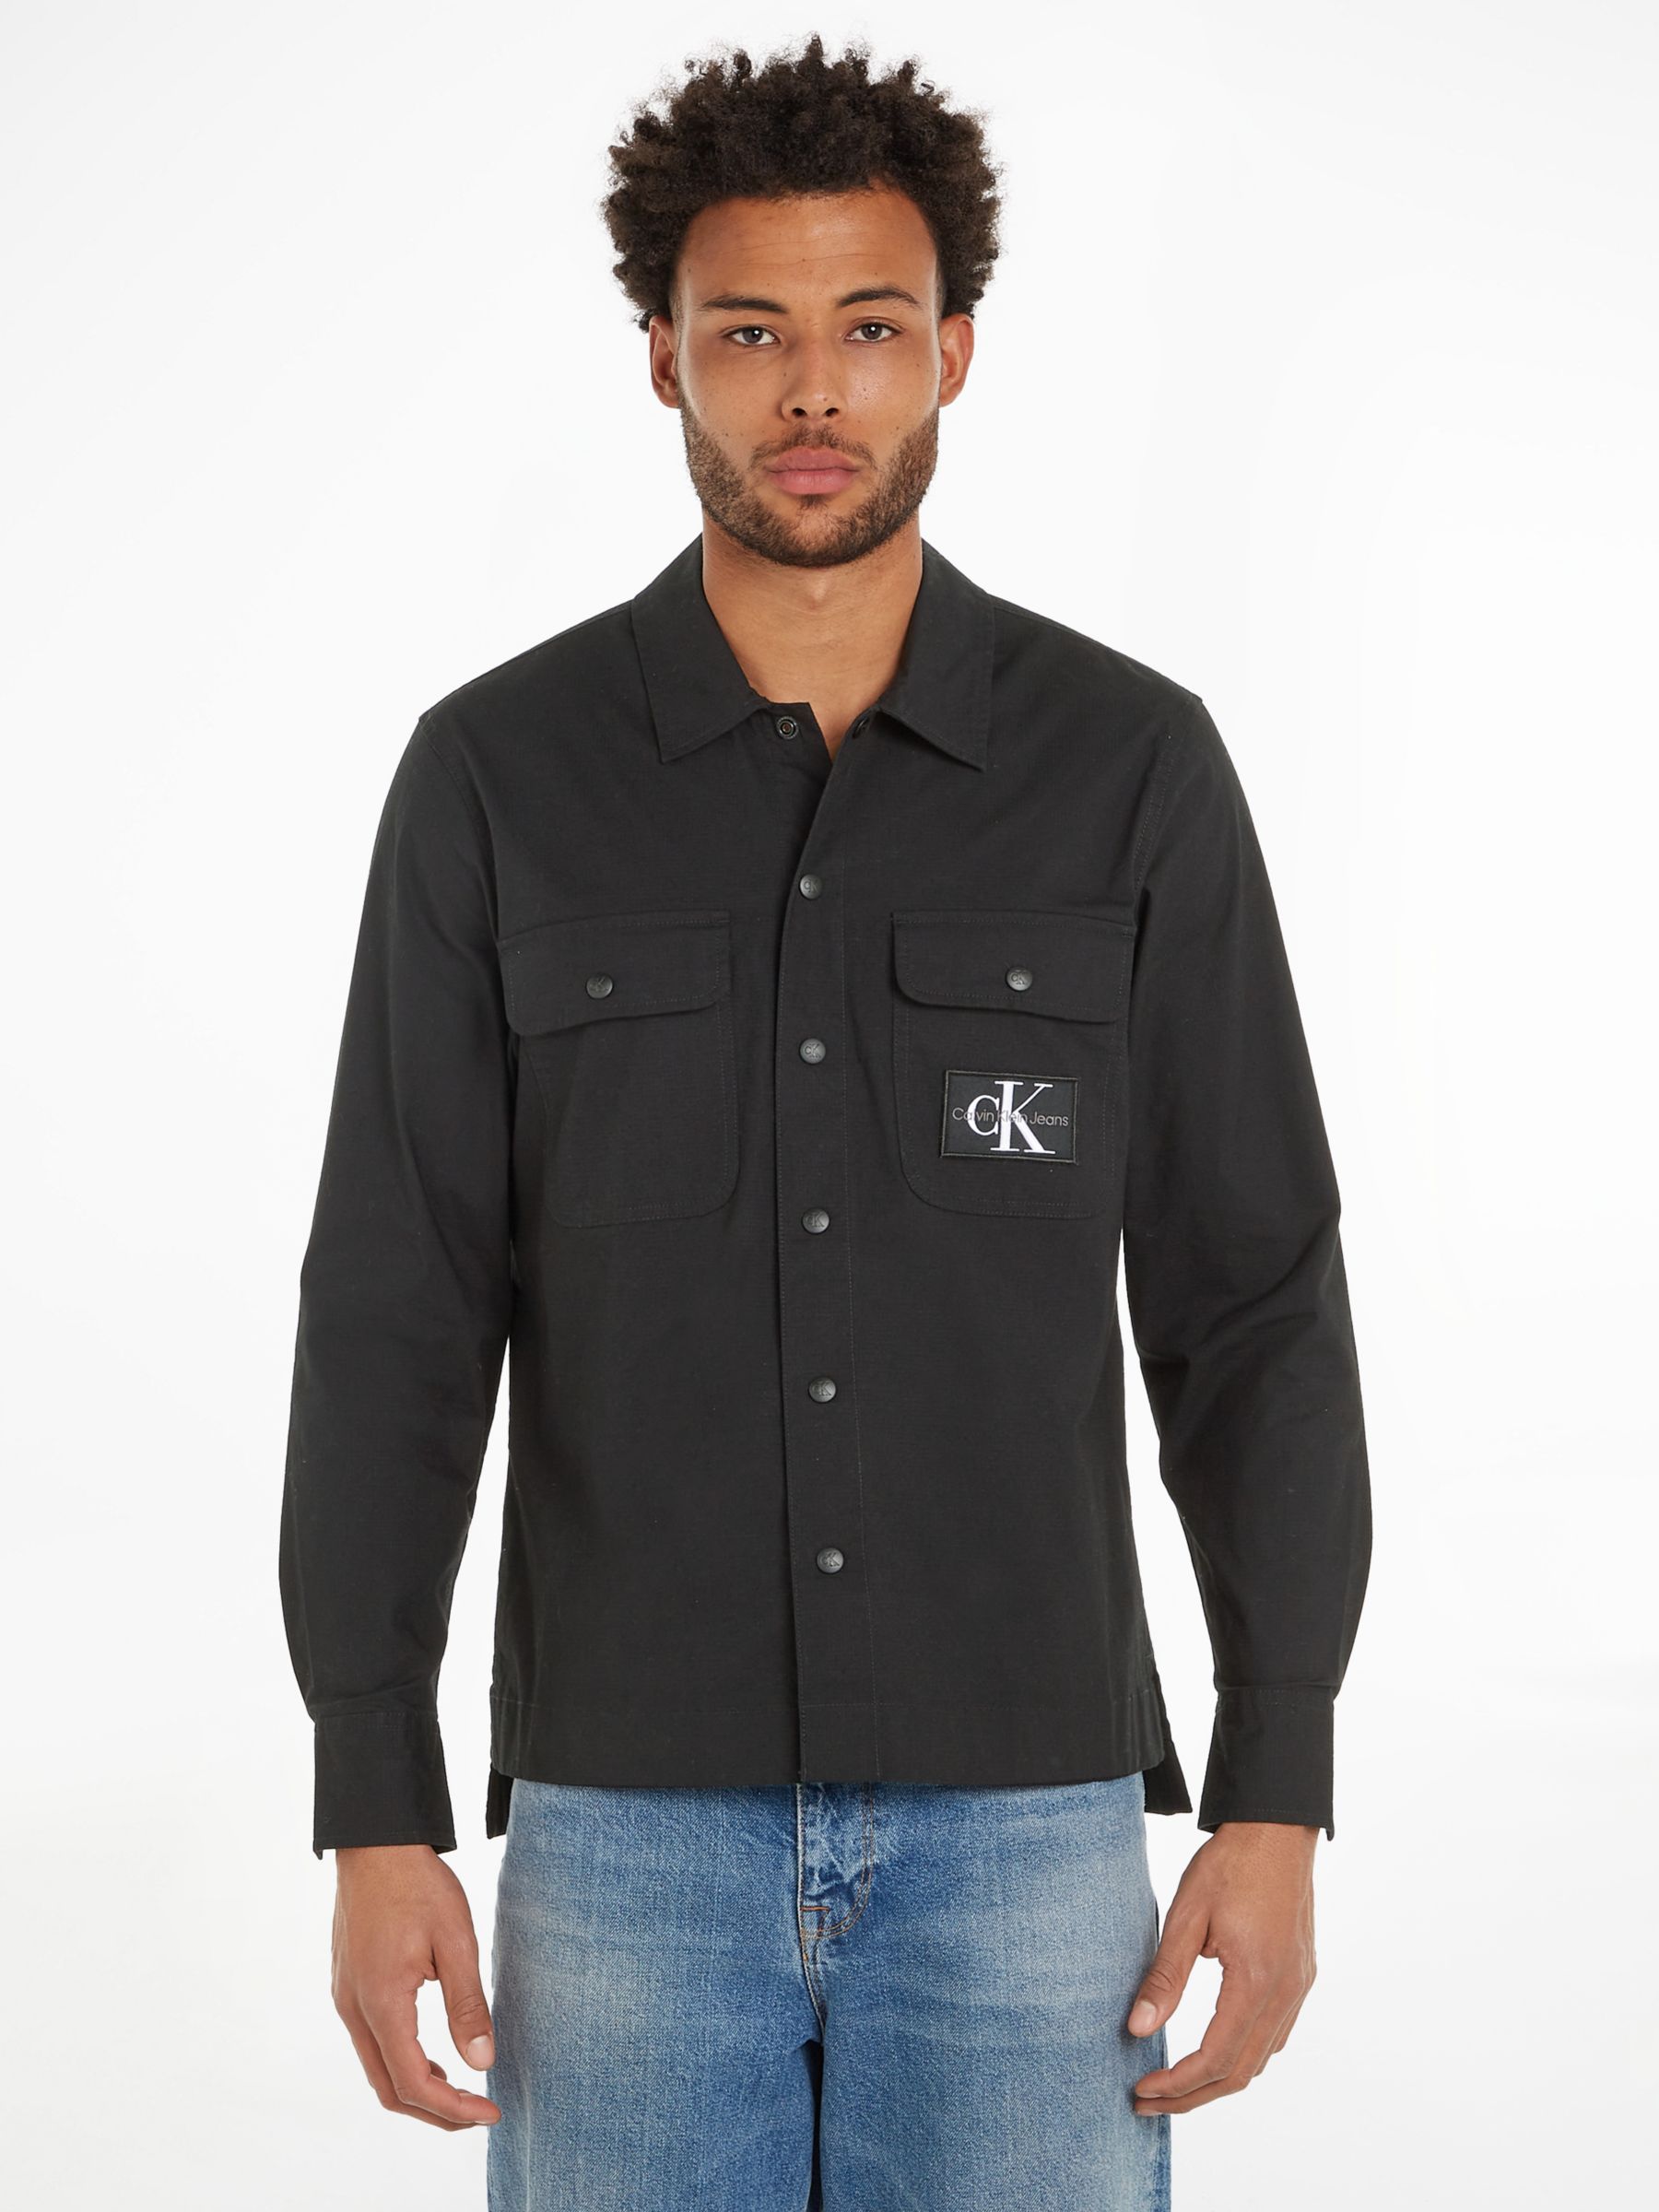 Calvin Klein Men's Long Sleeve Denim Button Down Shirt, Black